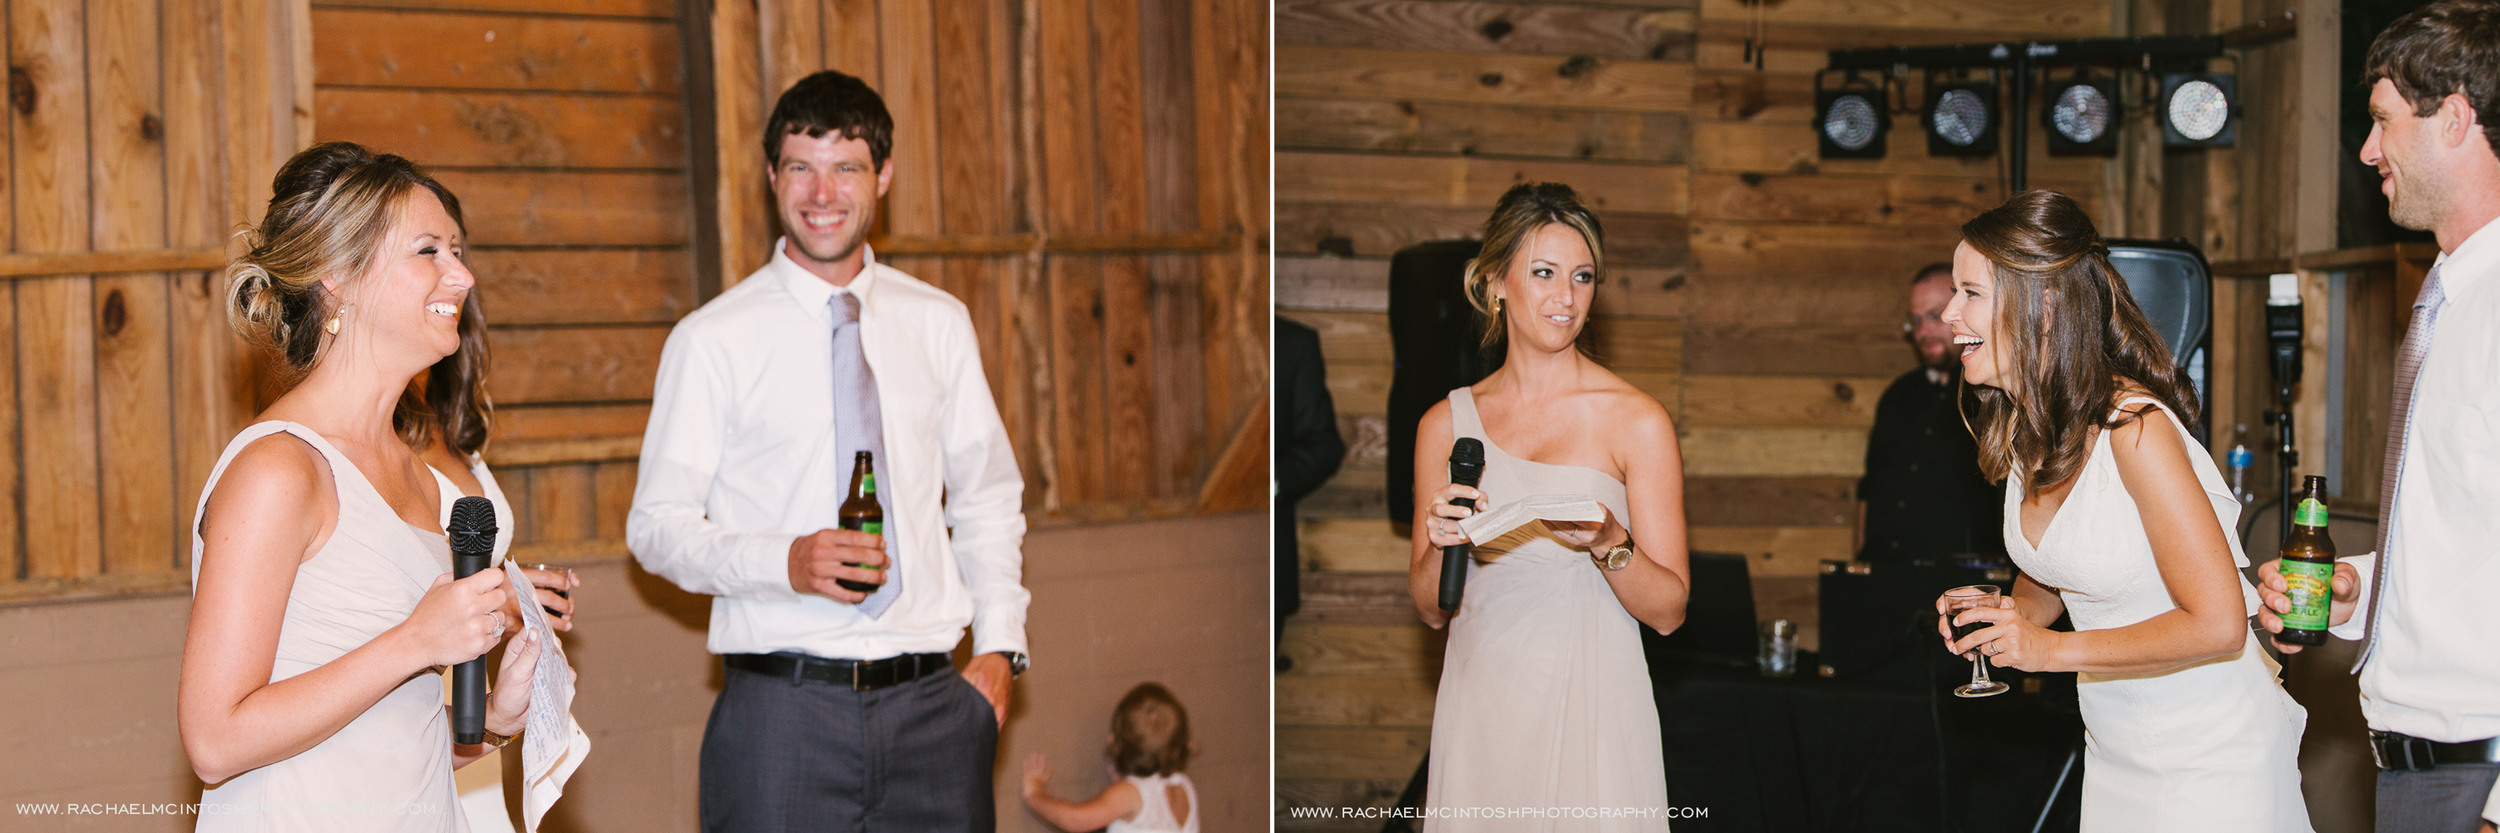 Asheville-Wedding-Blackberry-Fields-Rachael-McIntosh-Photography-160.jpg